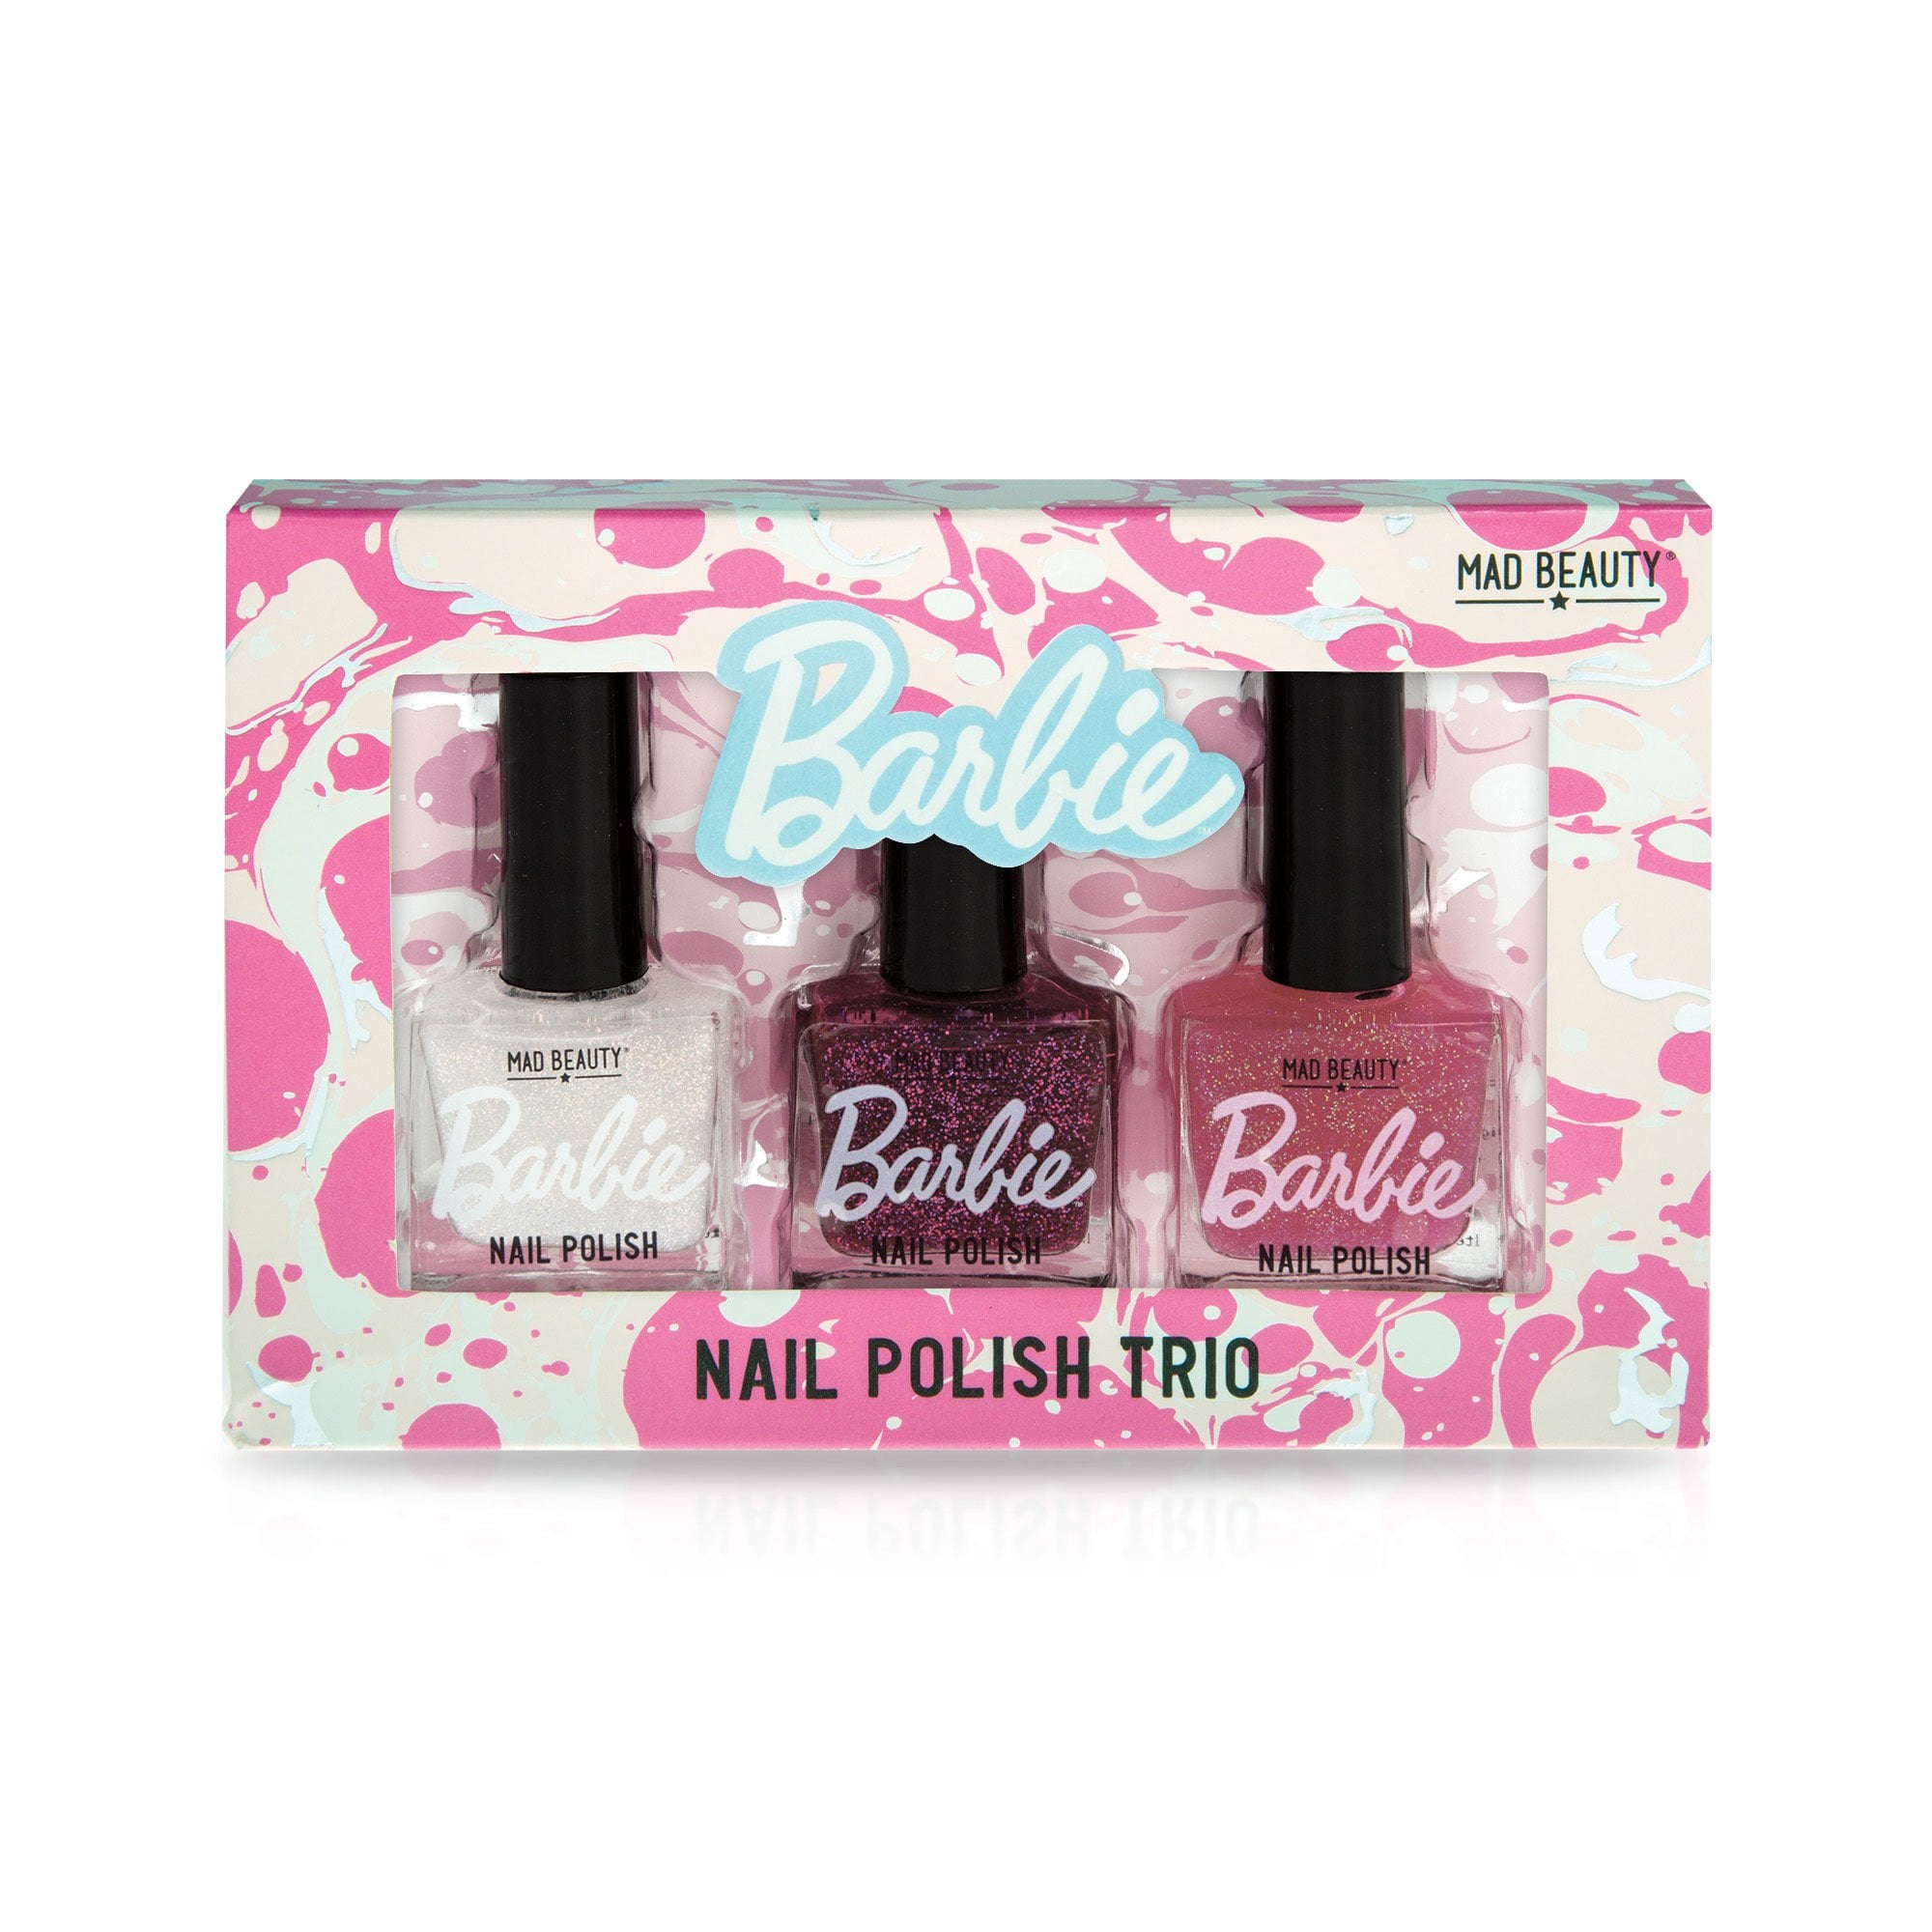 Mad Beauty Barbie Nail Polish Trio 3x 12ml RRP 8.99 CLEARANCE XL 6.99